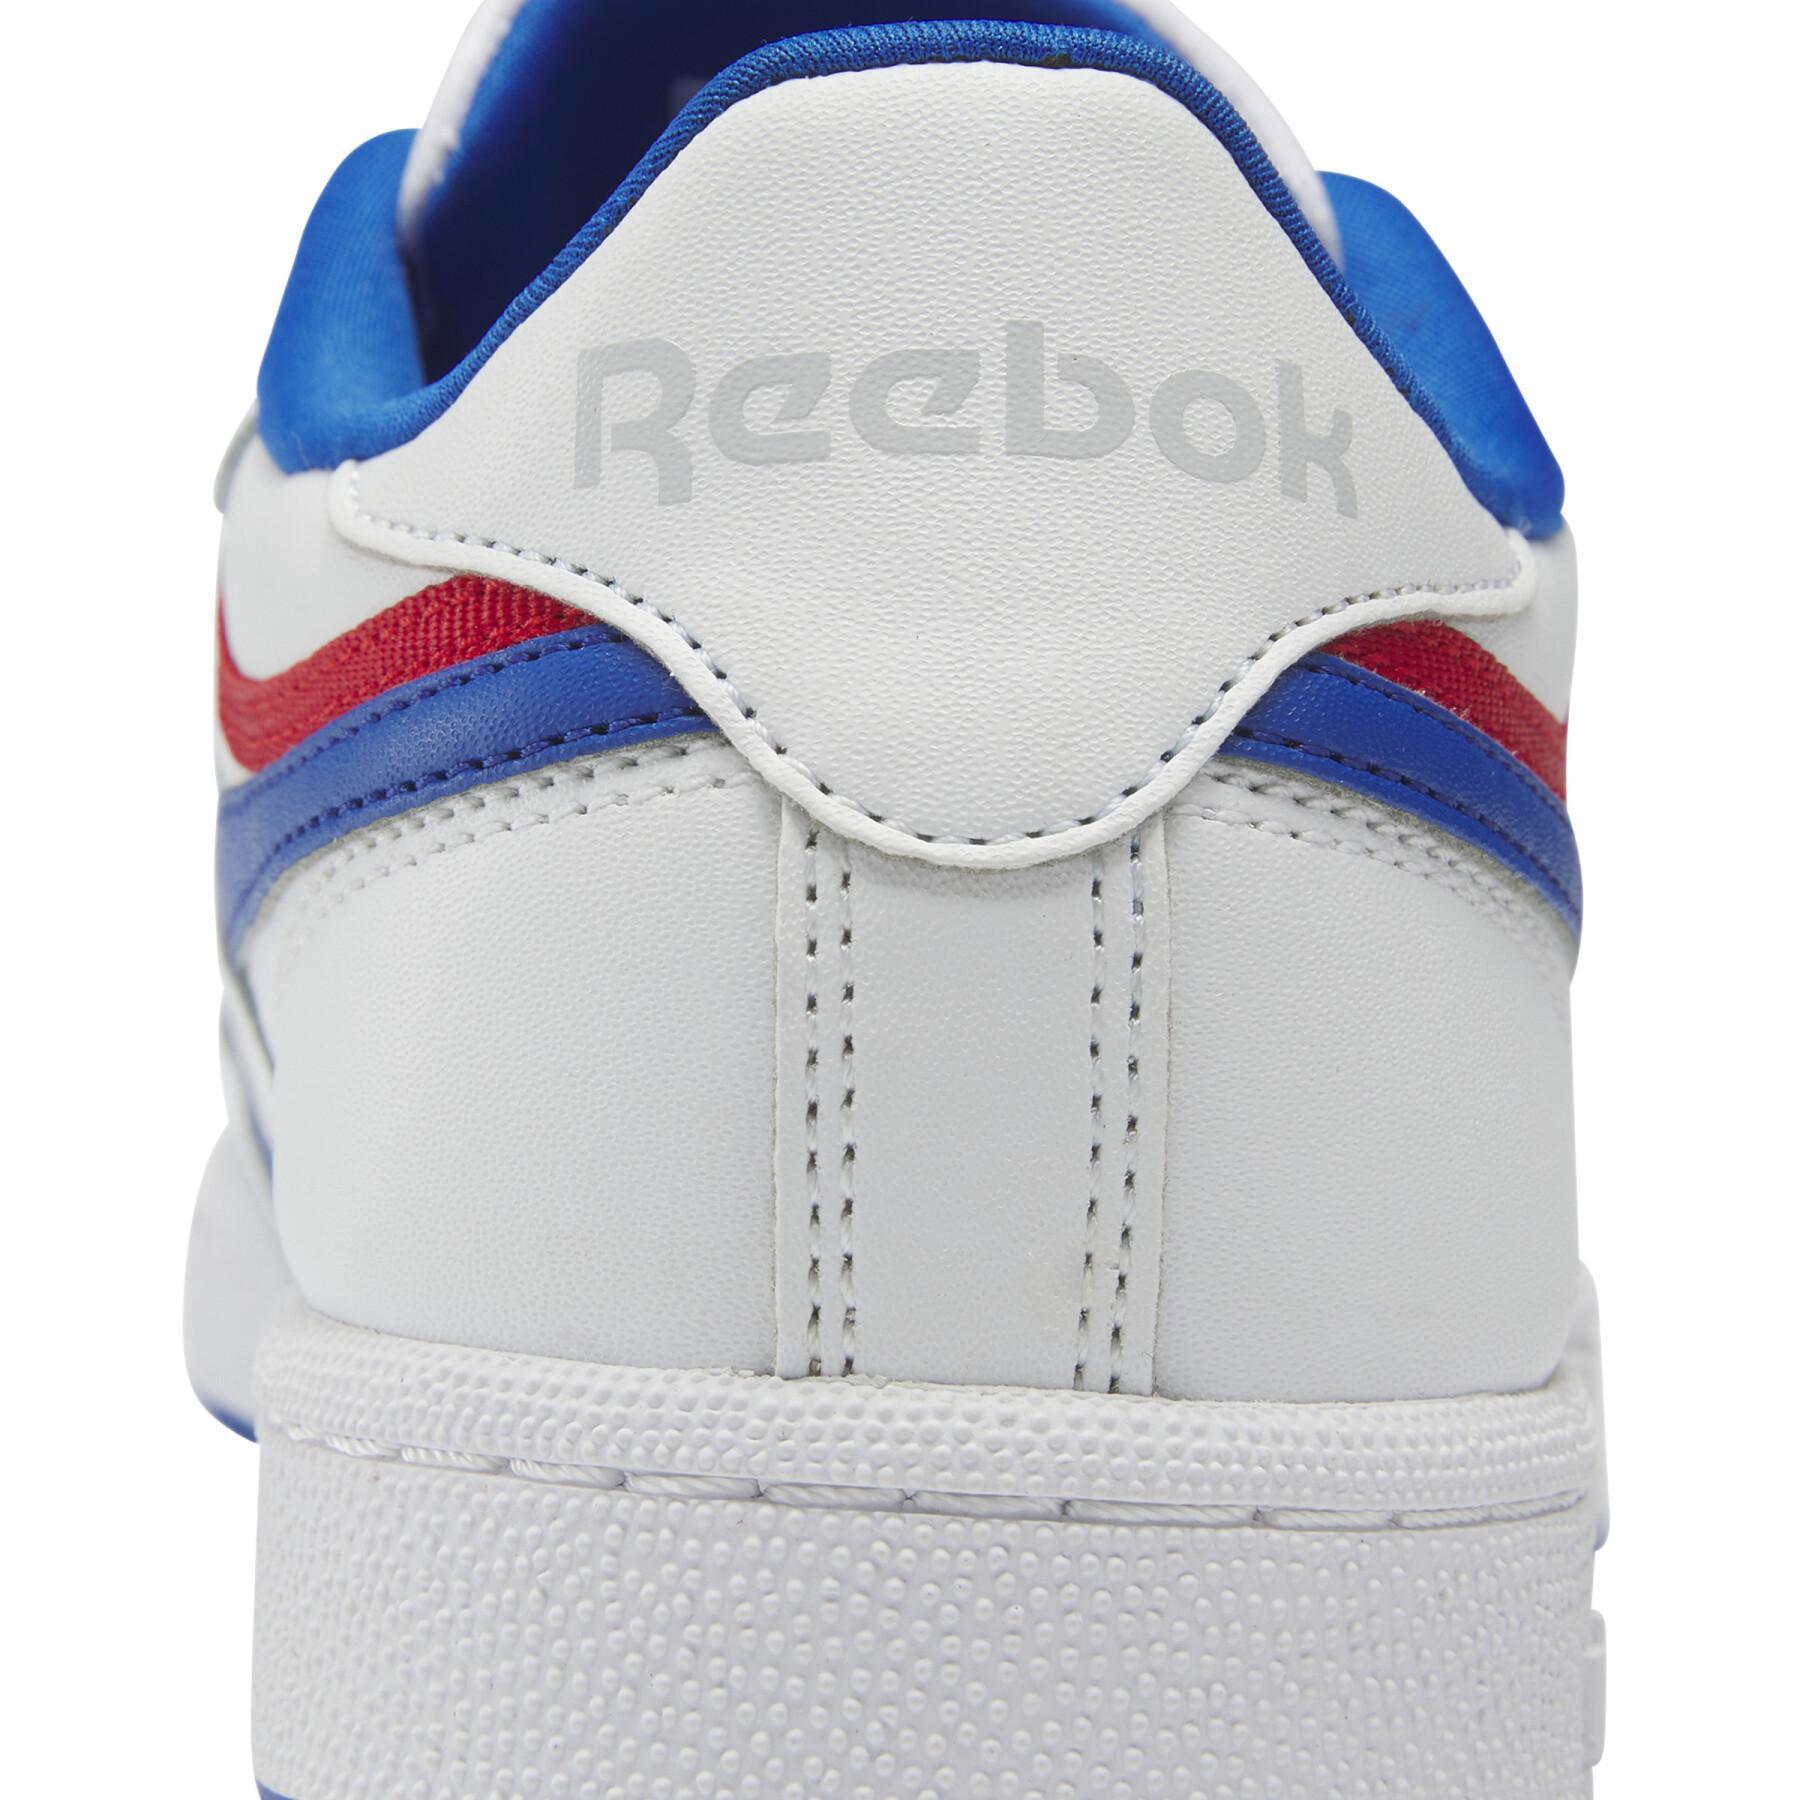 Children's sneakers Reebok Club C Revenge